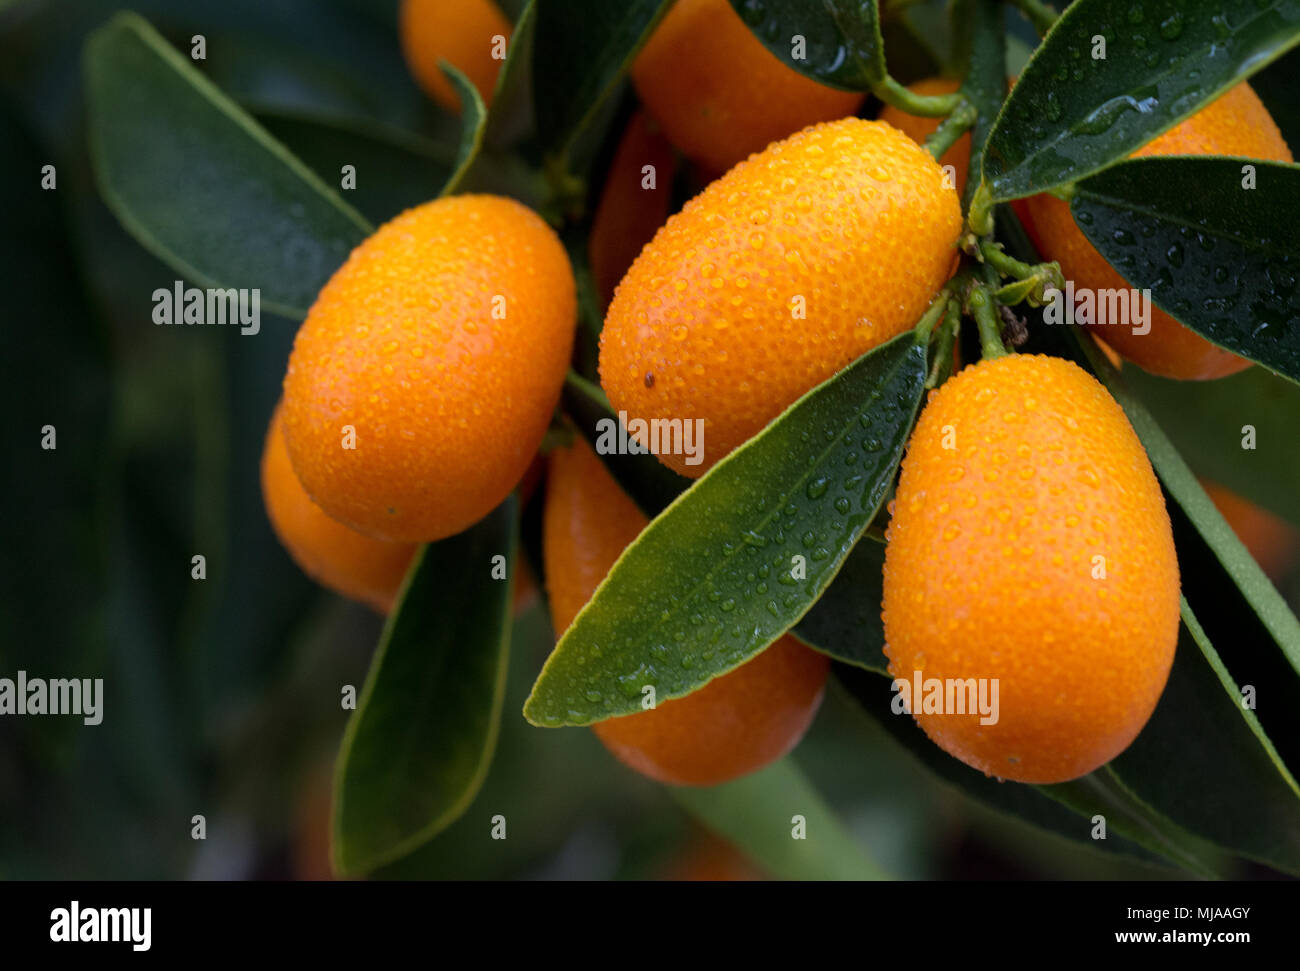 Kumquat fruits in the foliage Stock Photo